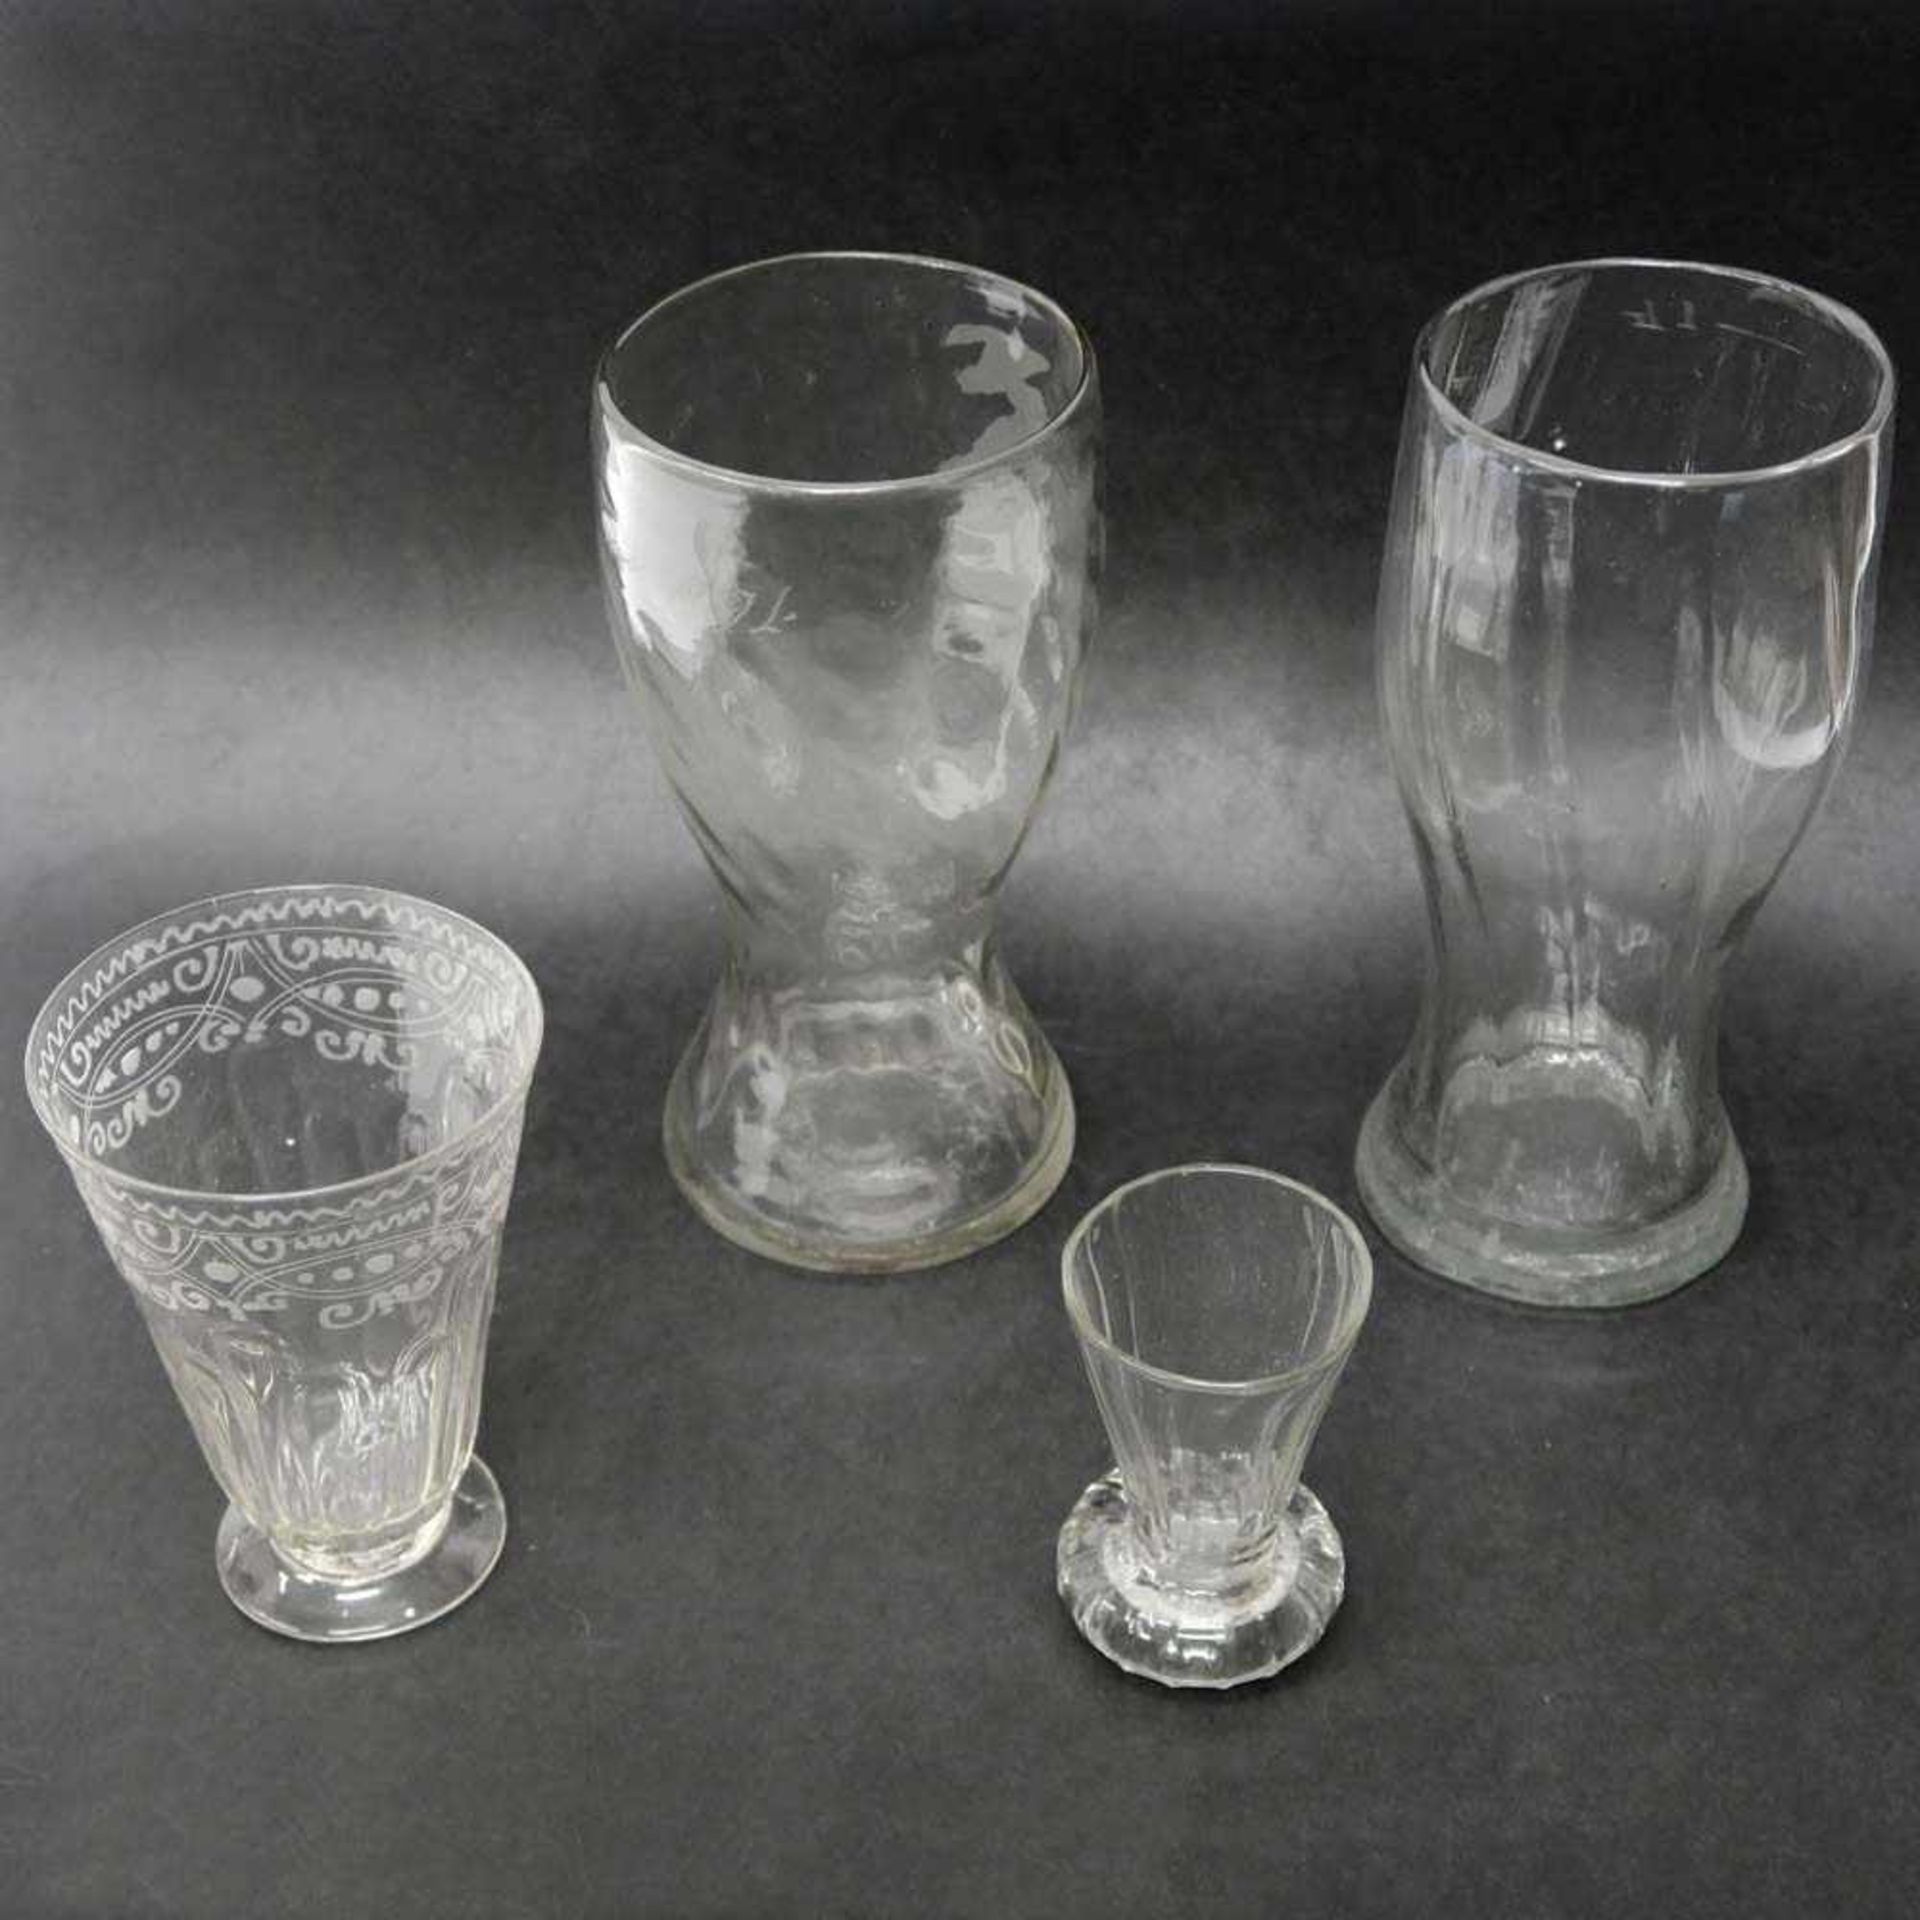 Zwei Becher (Liesel)2. Hälfte 19. Jh. Farbloses Formglas, optischer Rippen- bzw. Wabendekor. H. 22